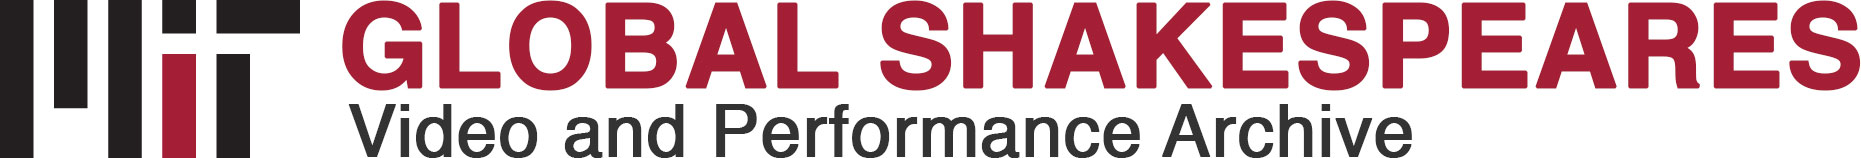 MIT Global Shakespeares logo